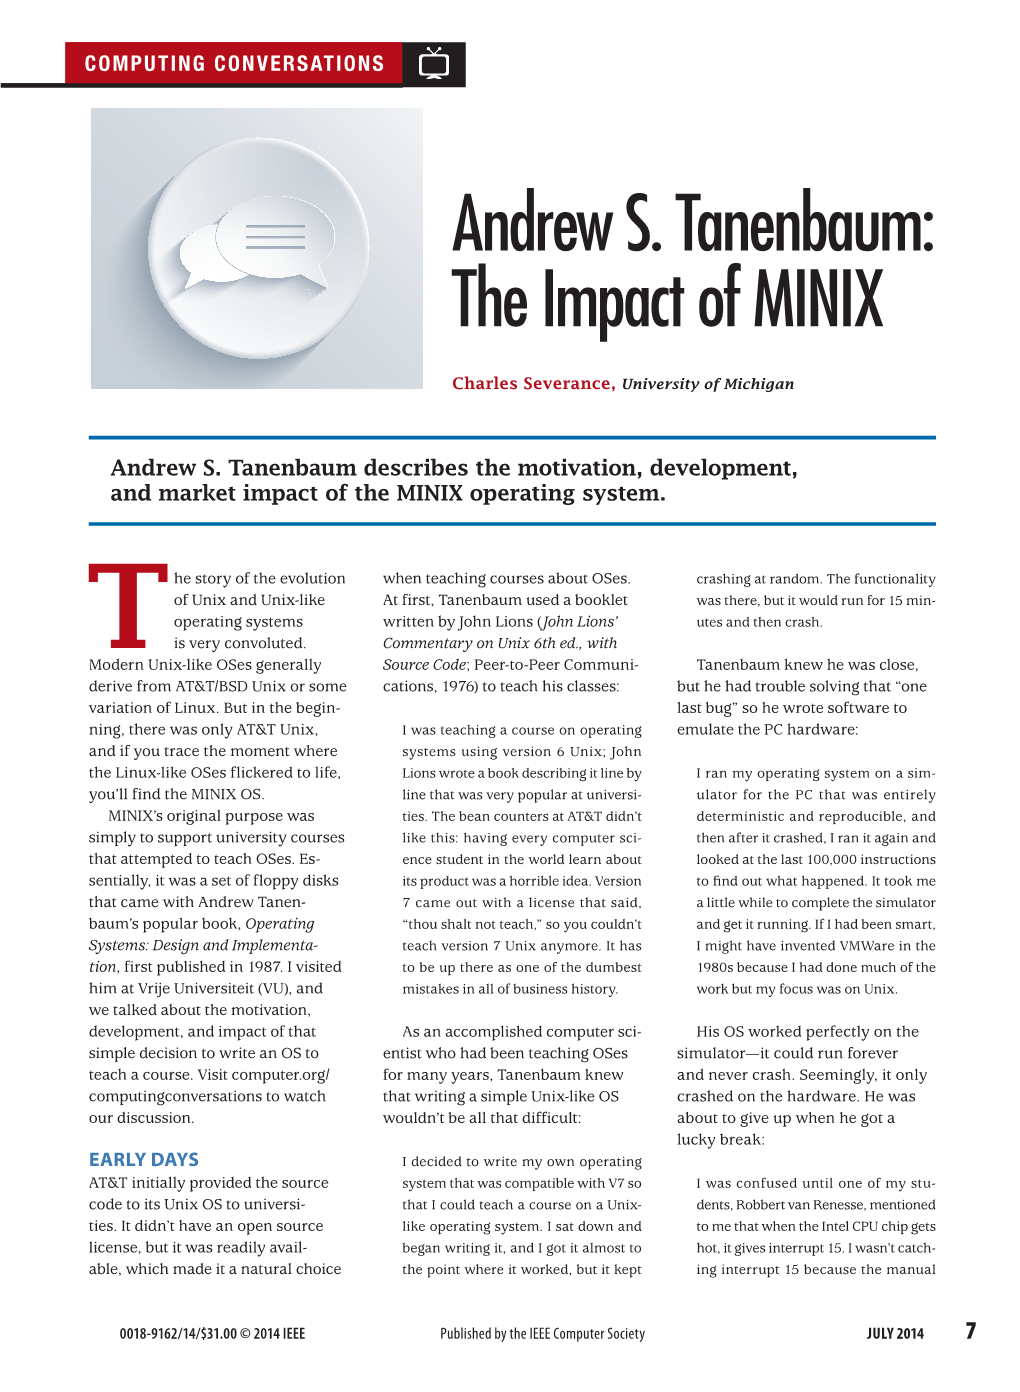 Andrew S. Tanenbaum: the Impact of MINIX